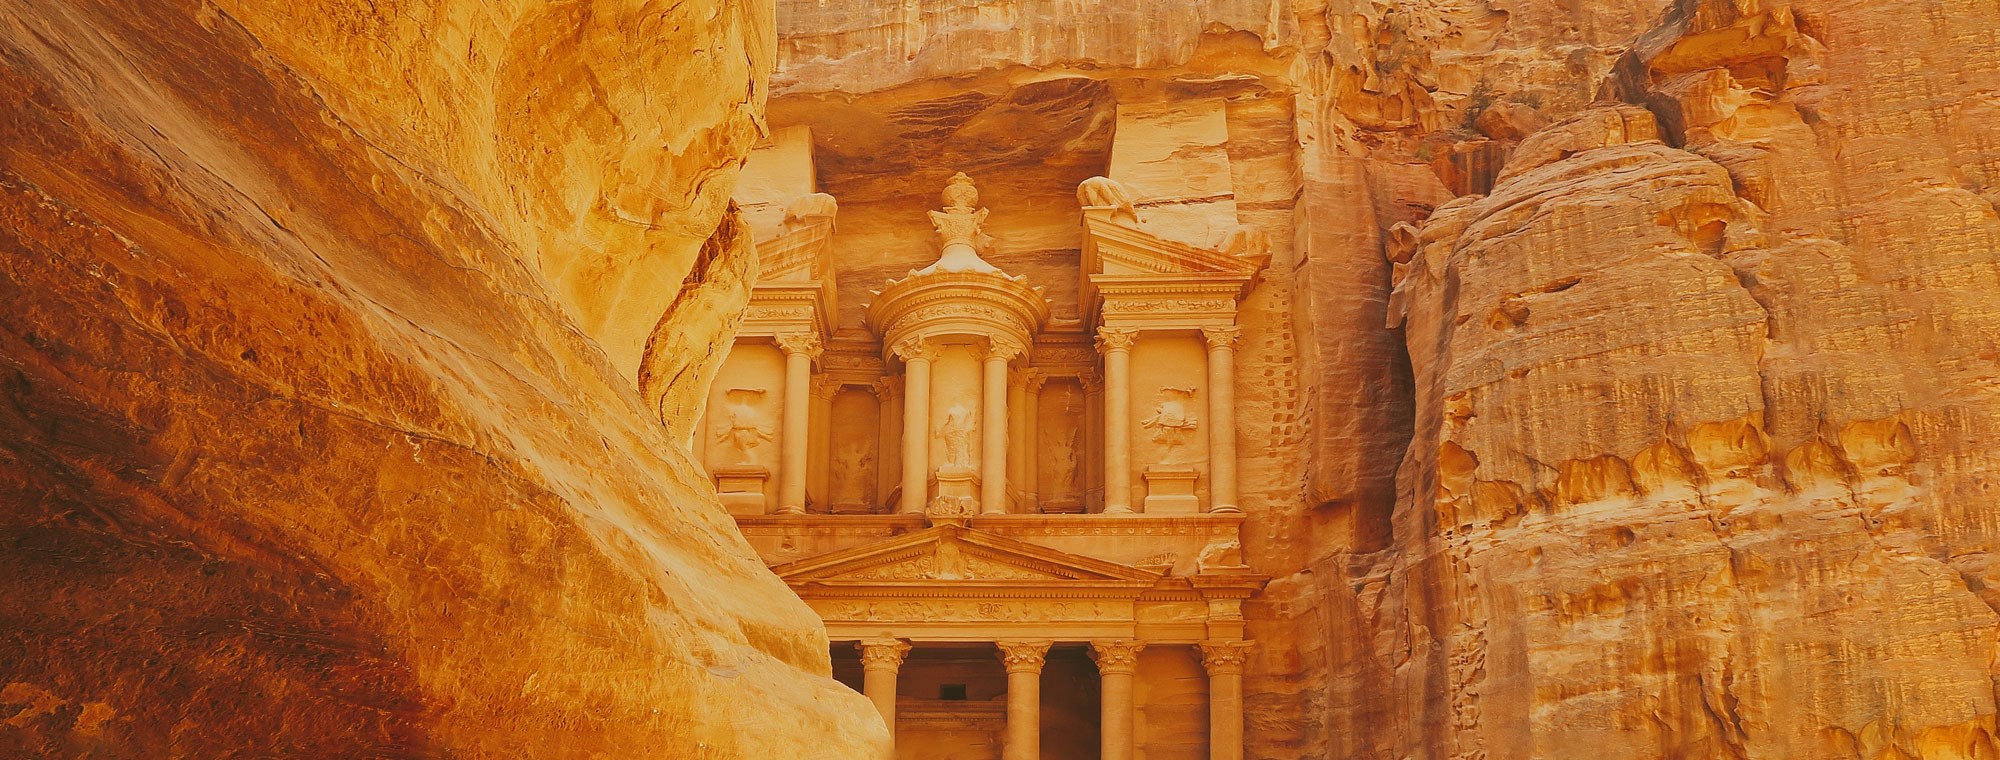 Middle East tours of Petra, Jordan